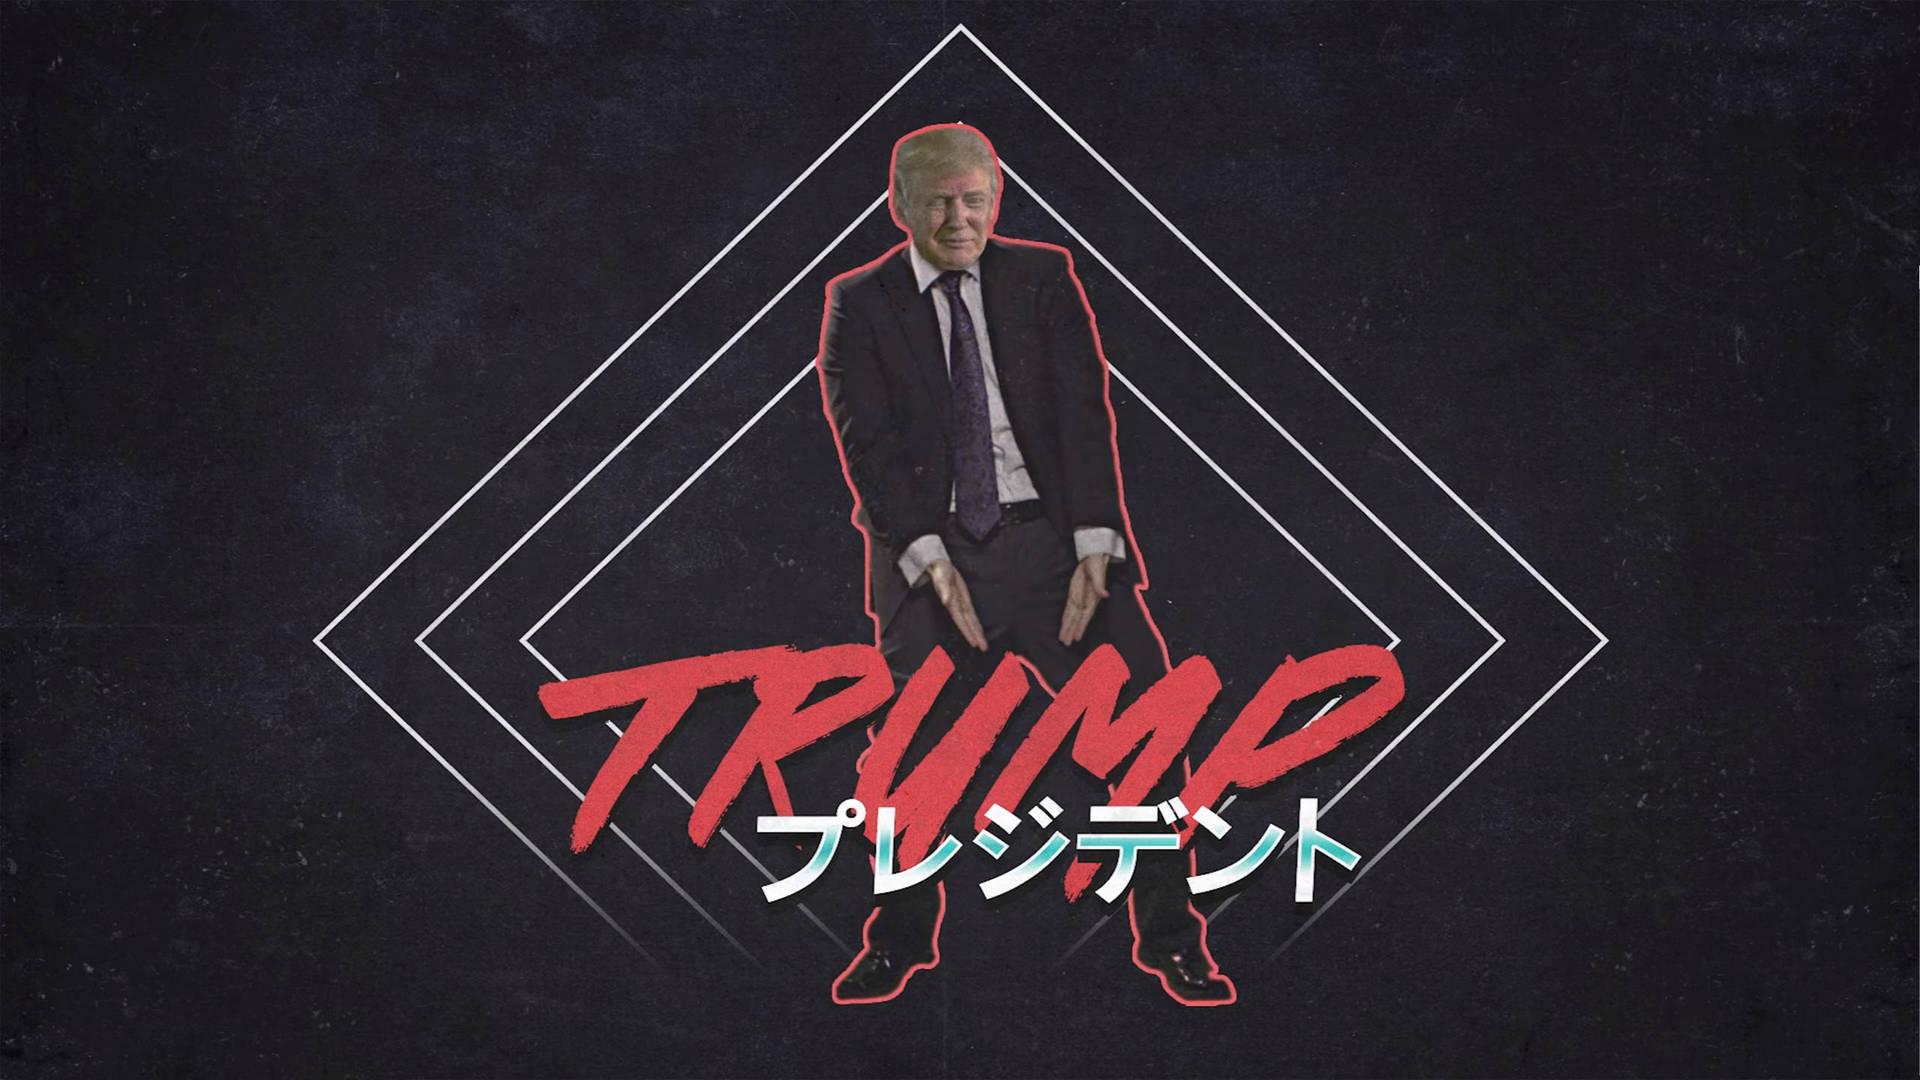 Trump Supports Japan Wallpaper